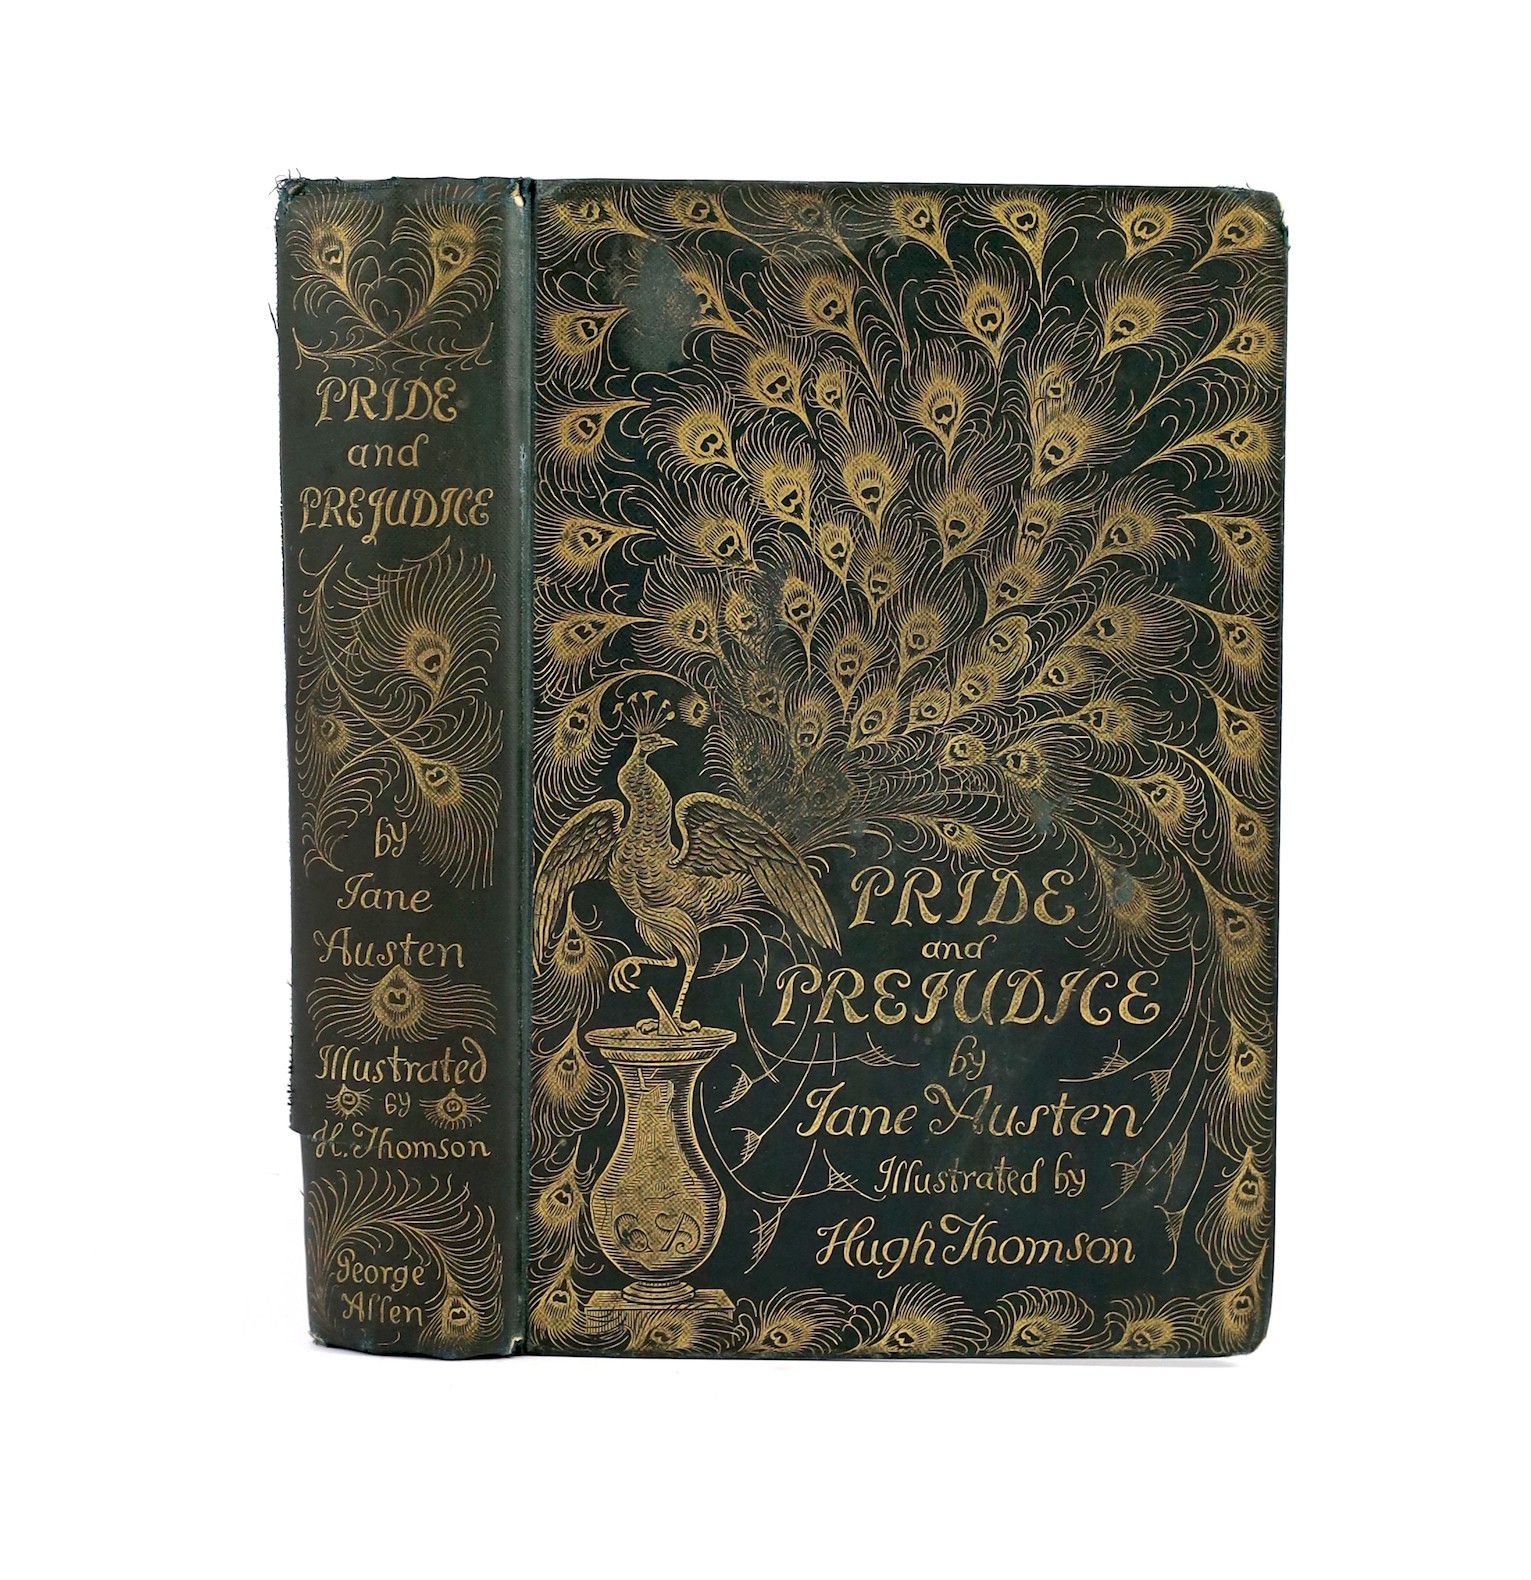 Austen, Jane - Pride and Prejudice, illustrated by Hugh Thomson, the “Peacock edition’’, 8vo, original cloth gilt, George Allen, London, 1894                                                                               